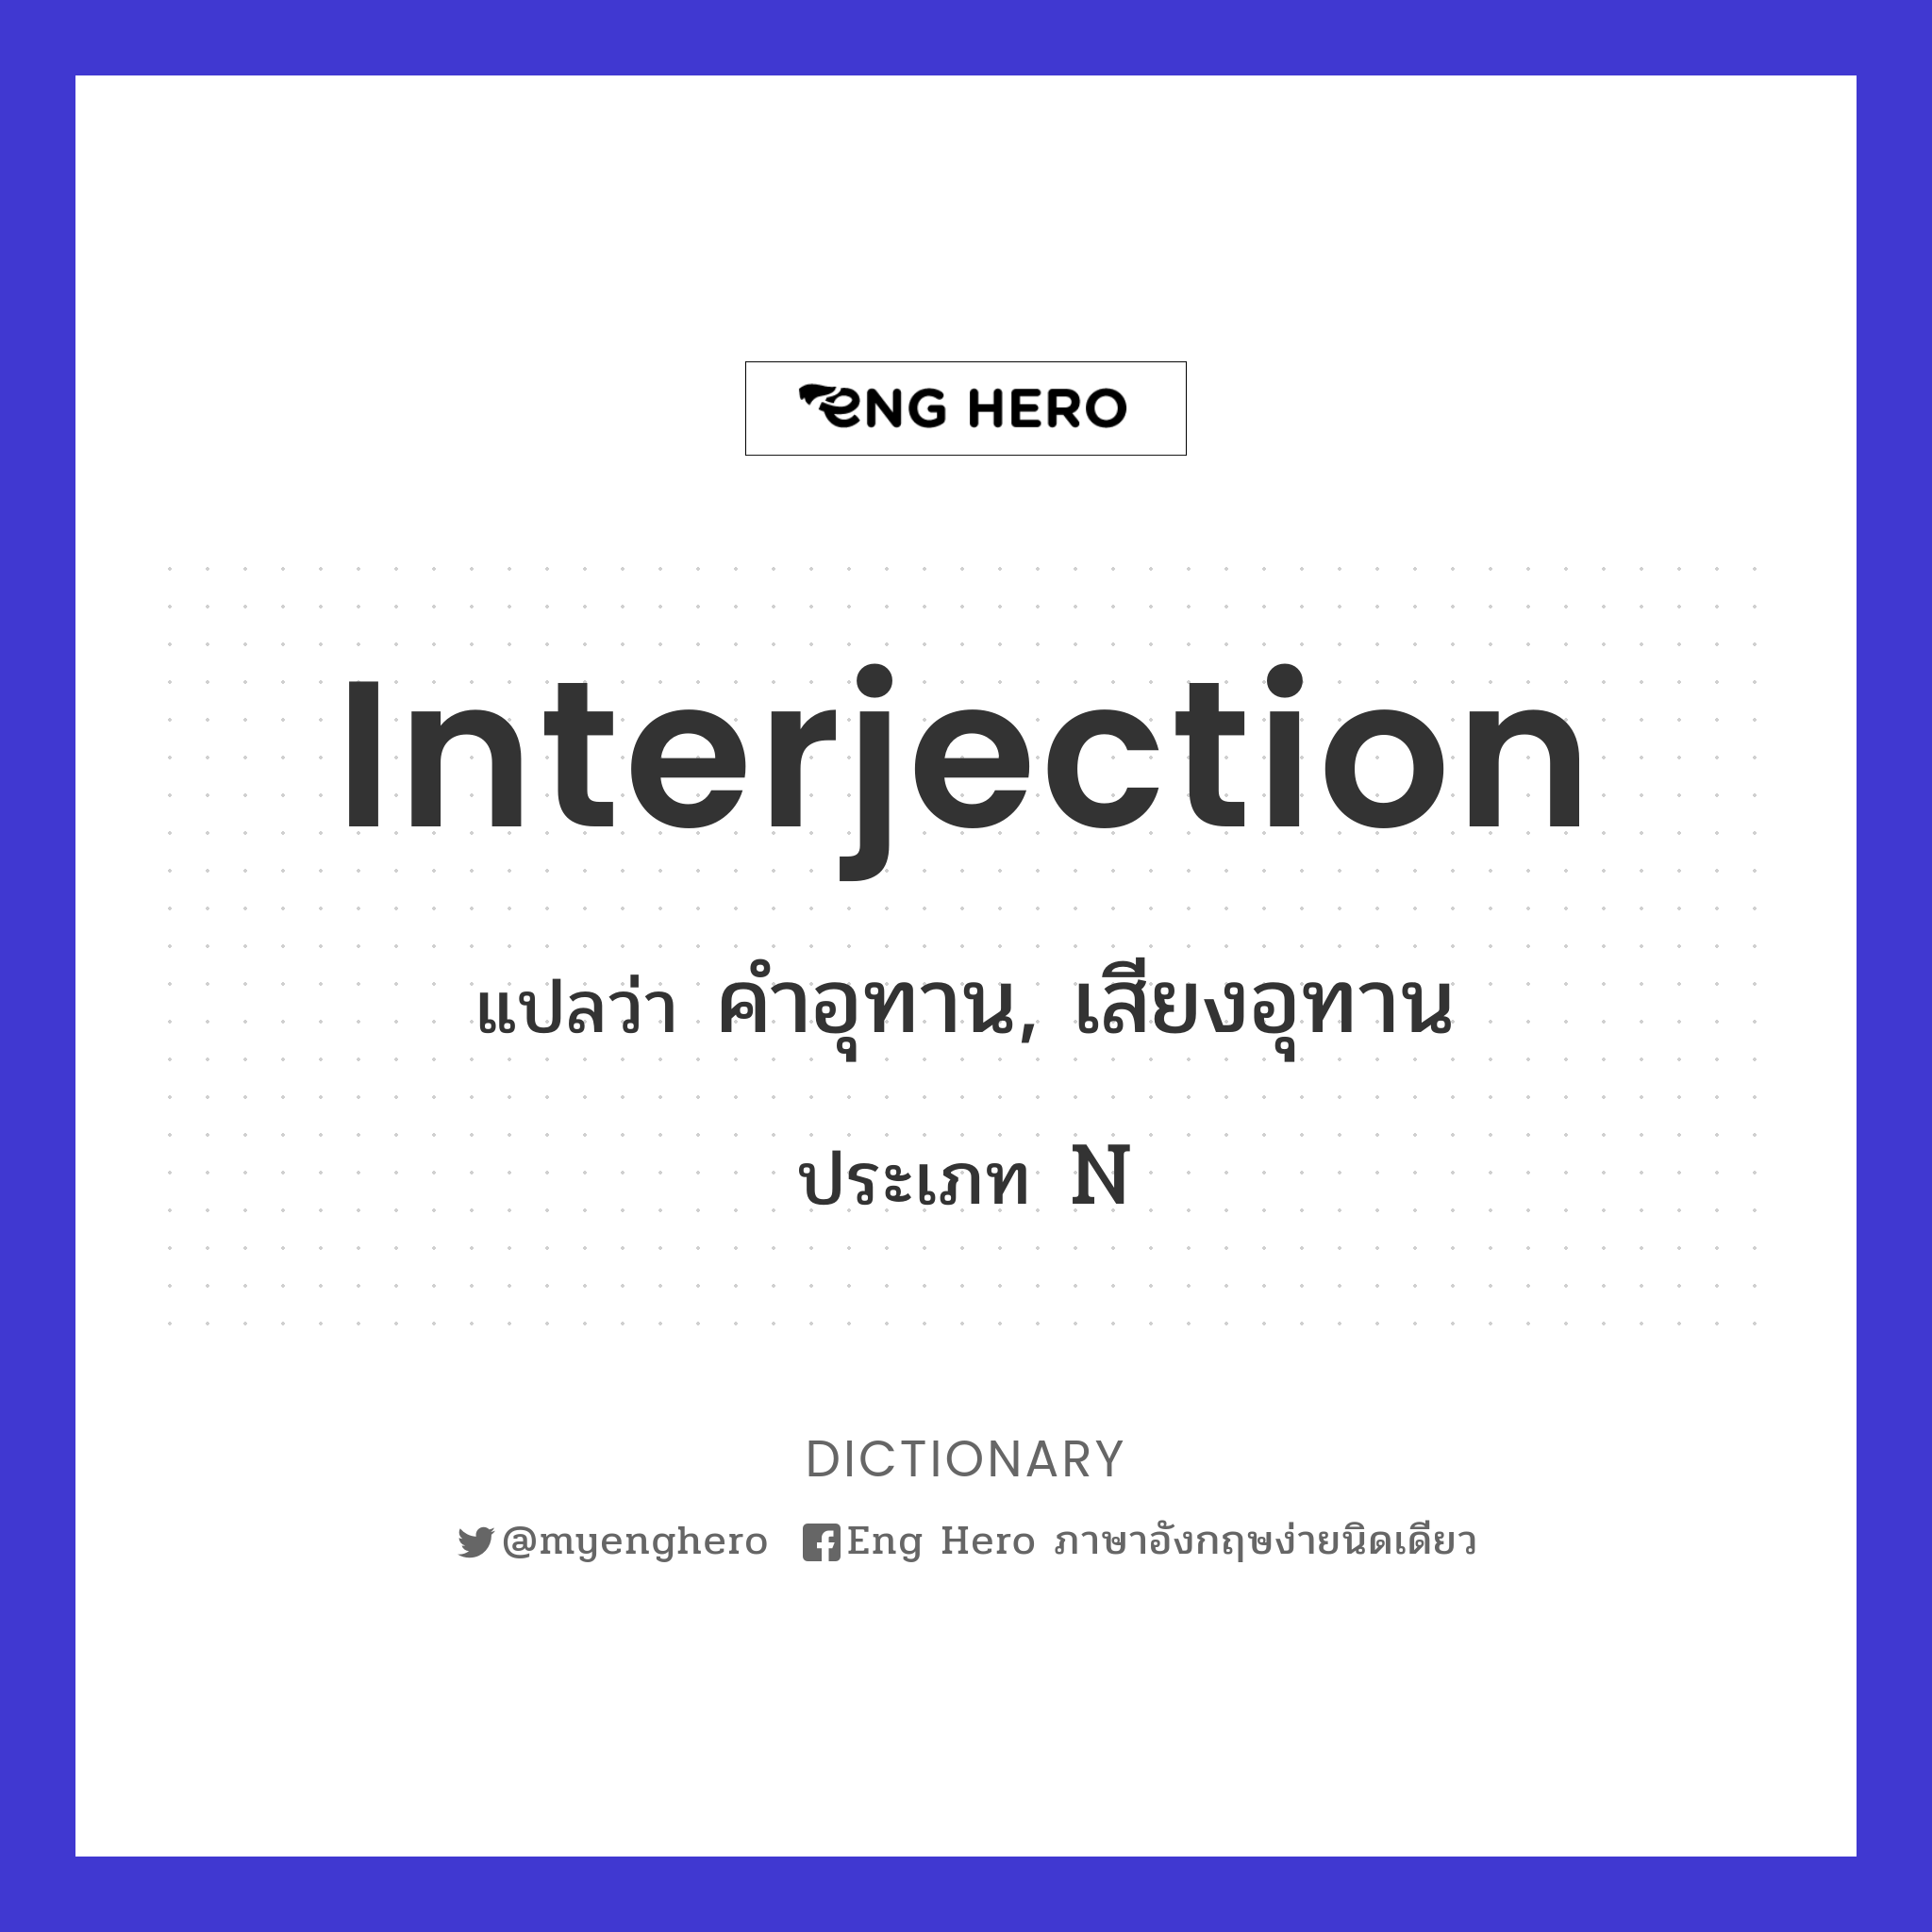 interjection